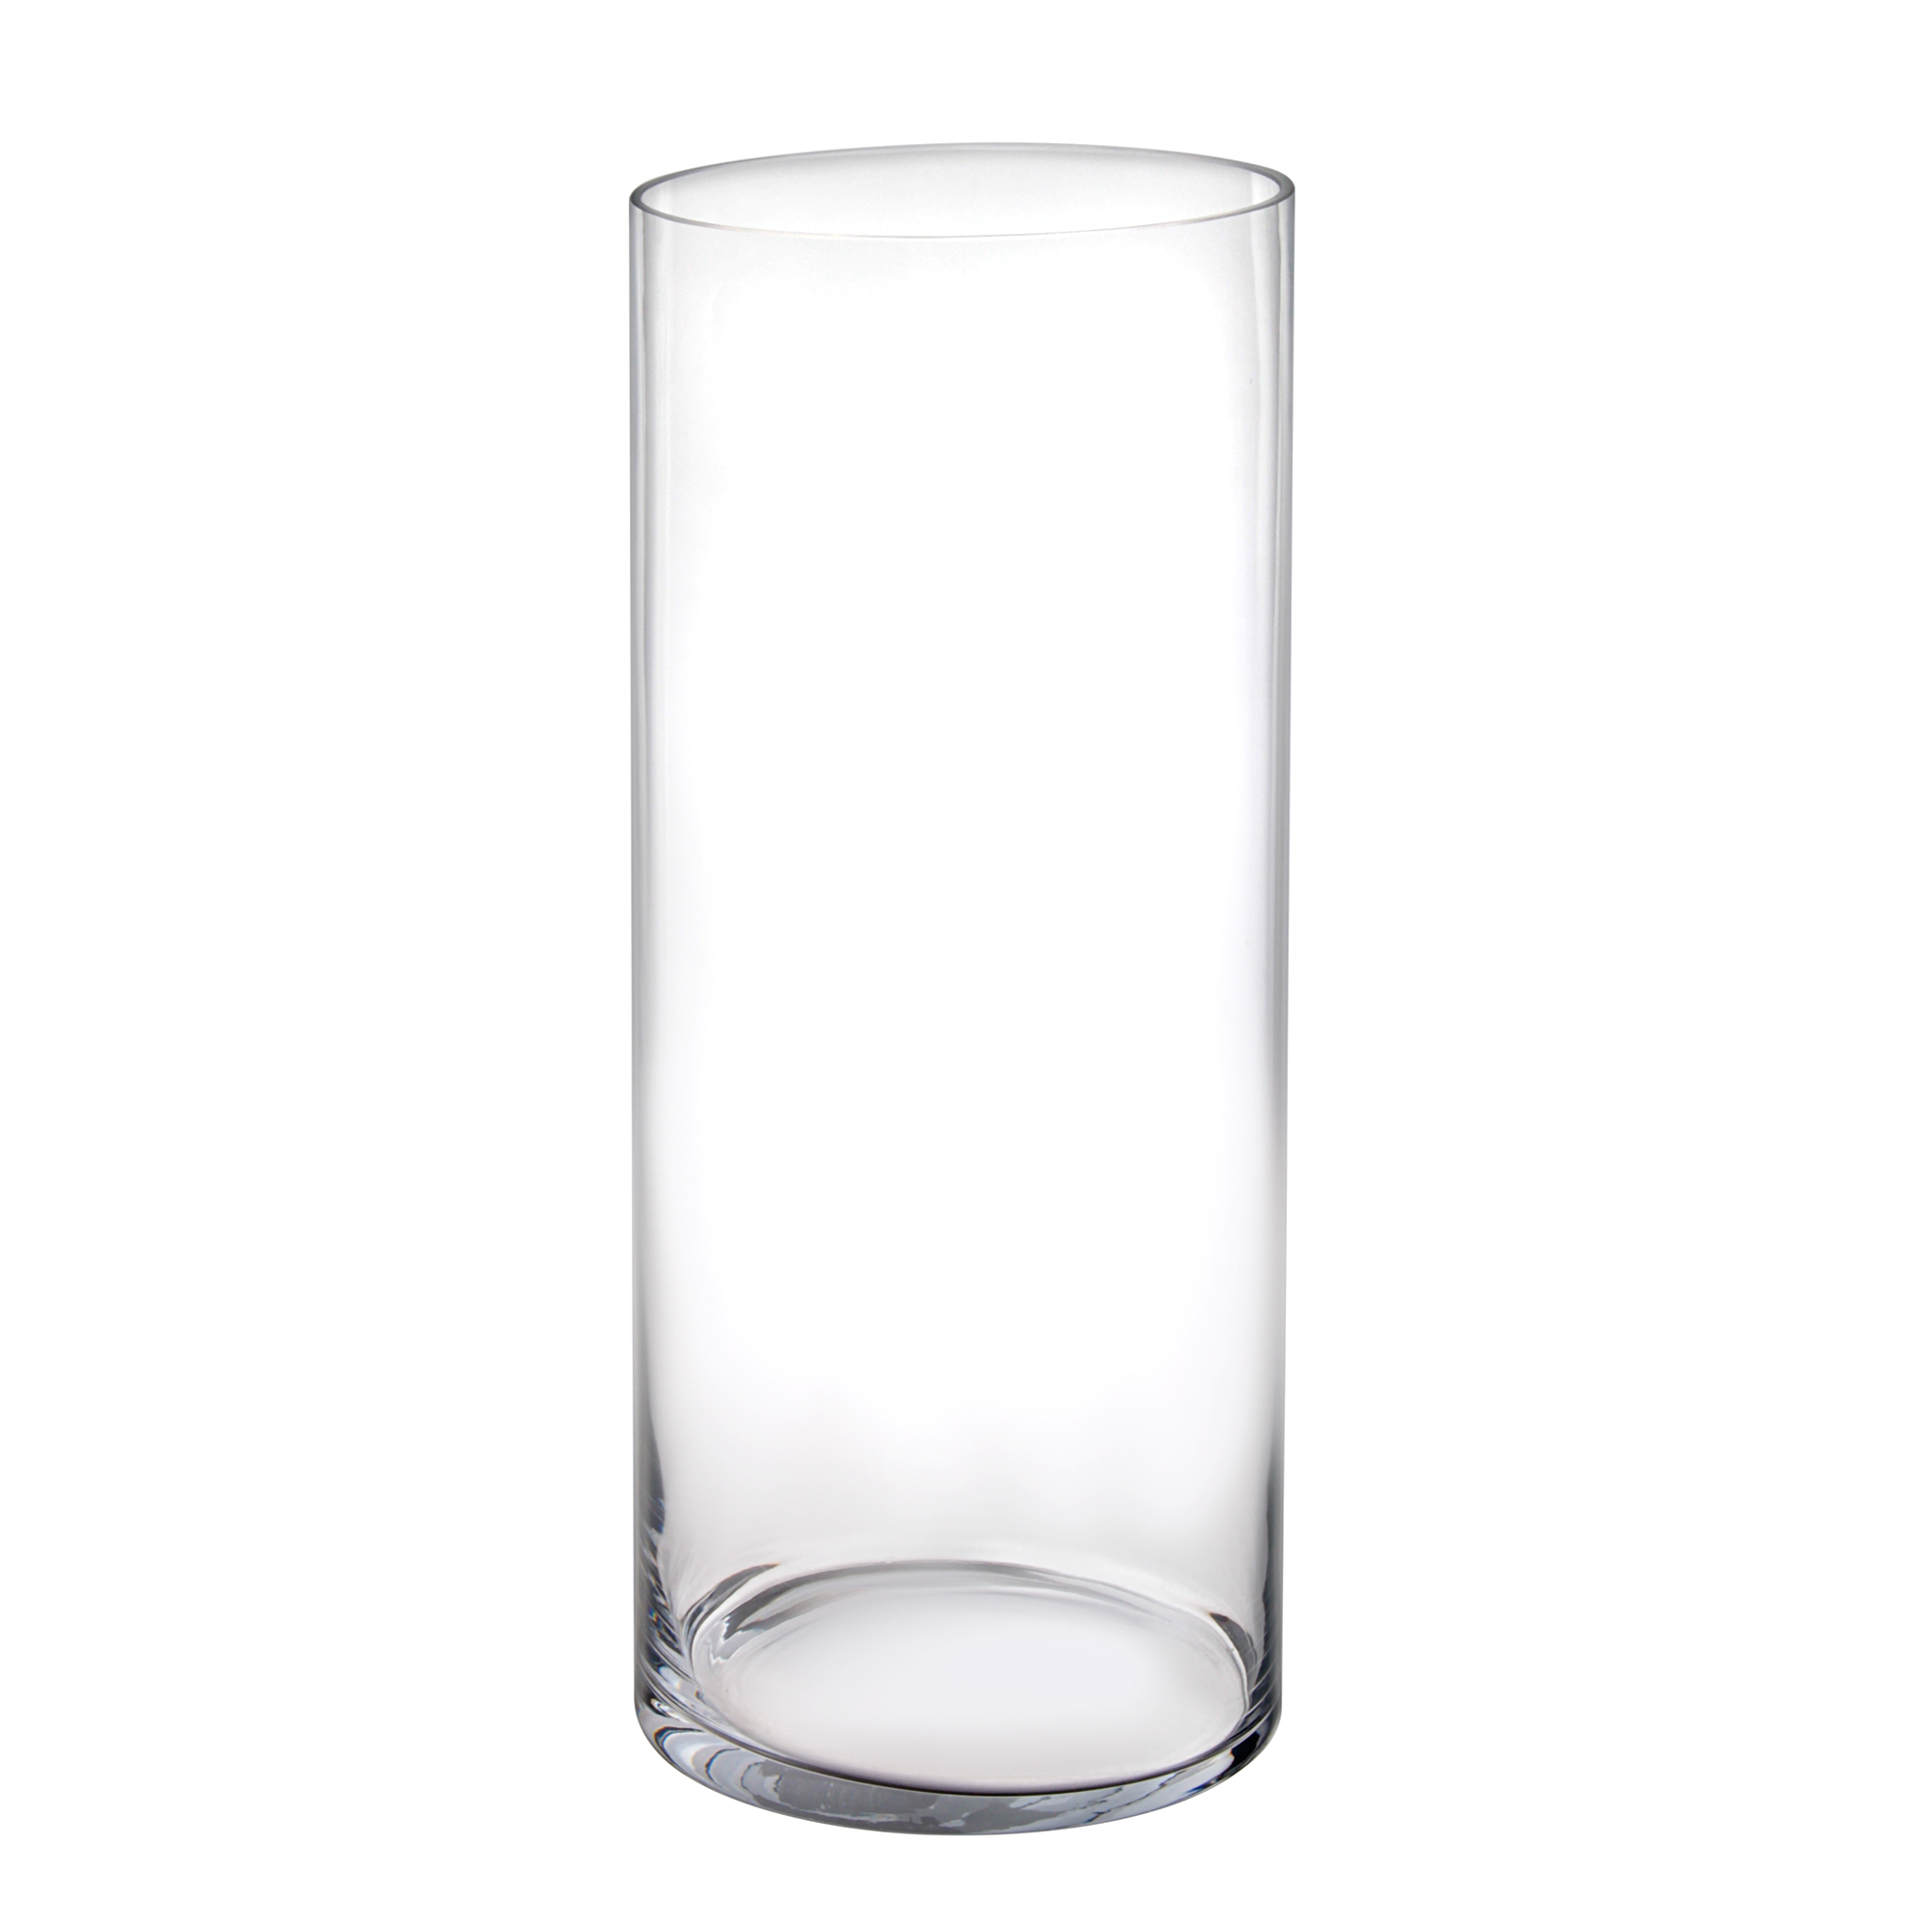 Ваза Hakbijl glass cylinder 60см